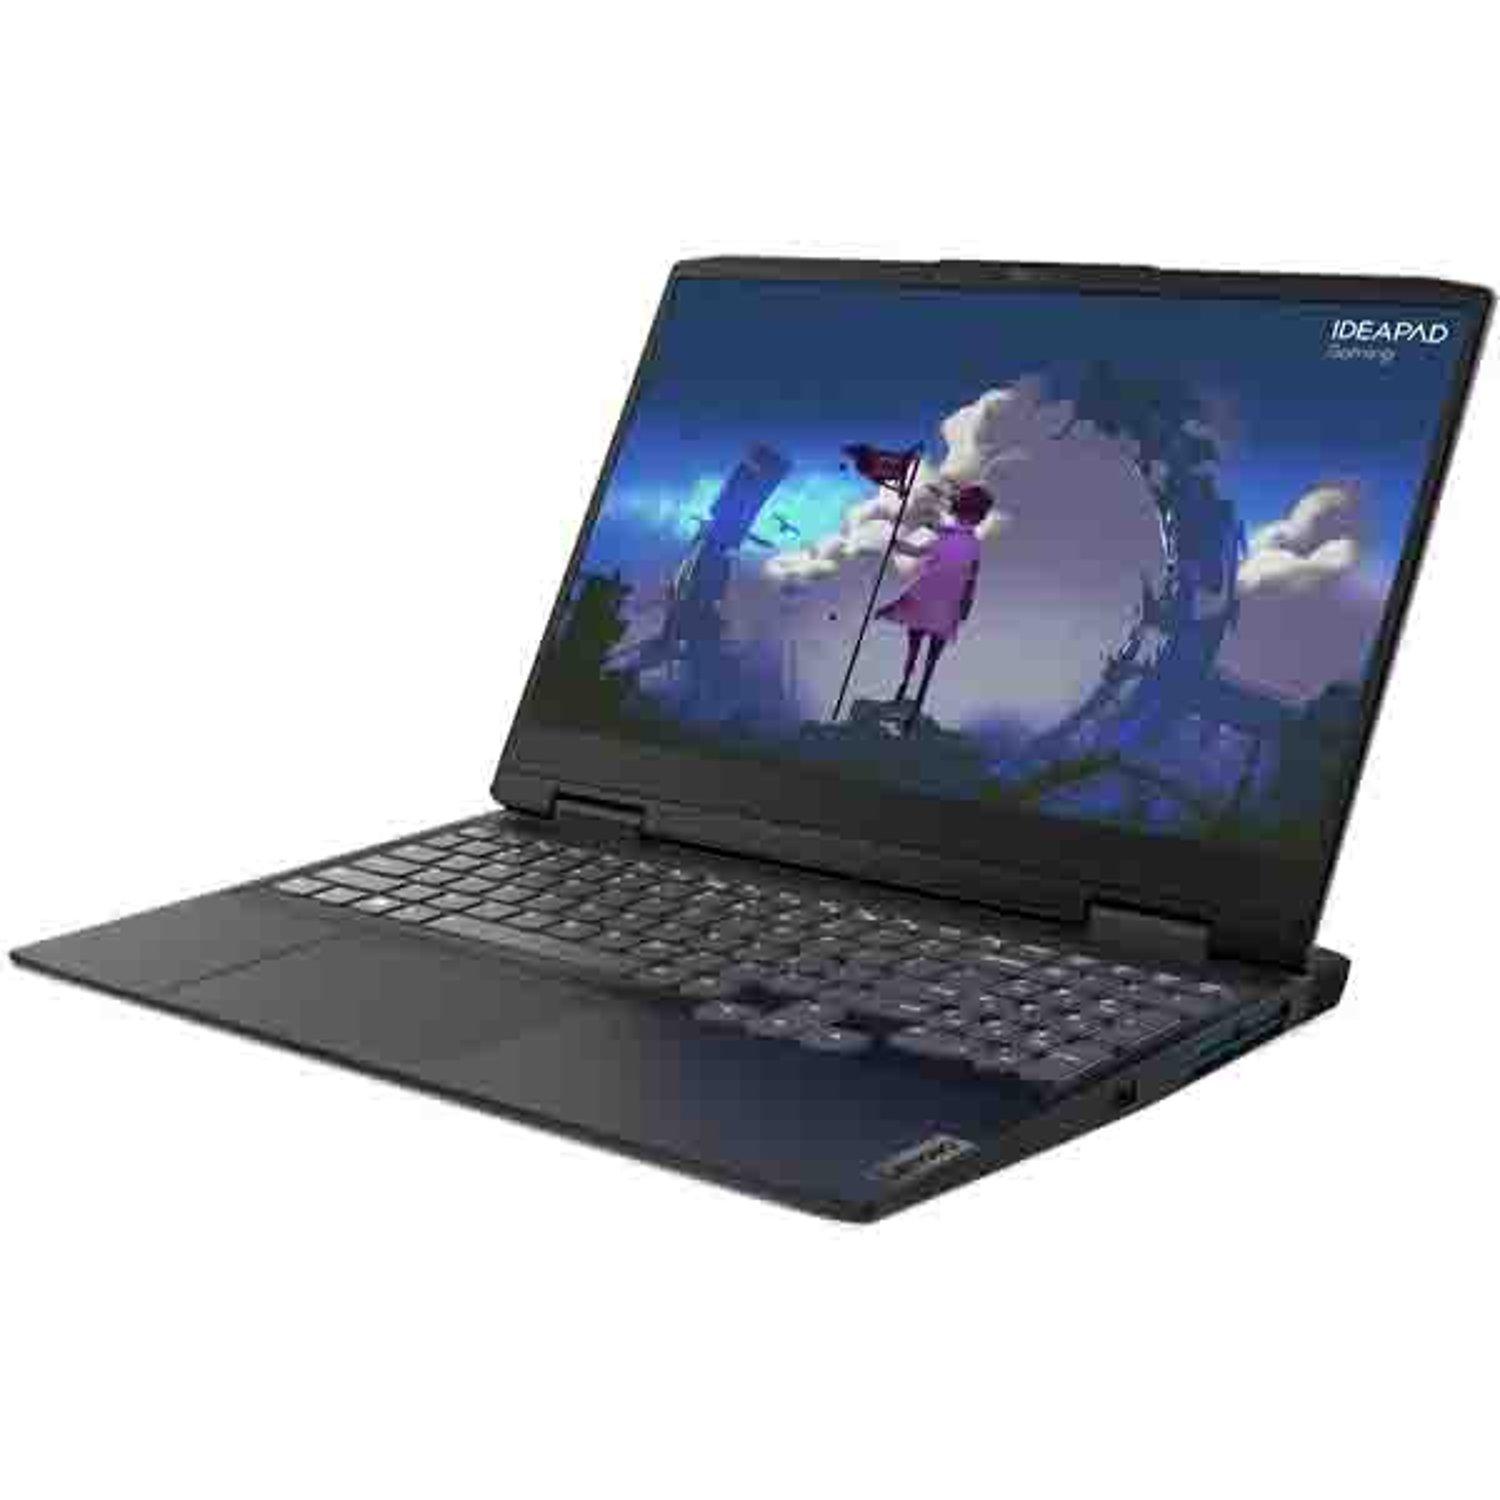  2022 Lenovo IdeaPad Gaming Laptop 15.6 FHD IPS 120Hz, AMD  Ryzen 5 5600H (Beats i7-10850H), GeForce RTX 3050 Ti Graphics, 32GB DDR4  RAM, 1TB SSD, Backlit Keyboard, Wireless-AX, Windows 11 : Electronics